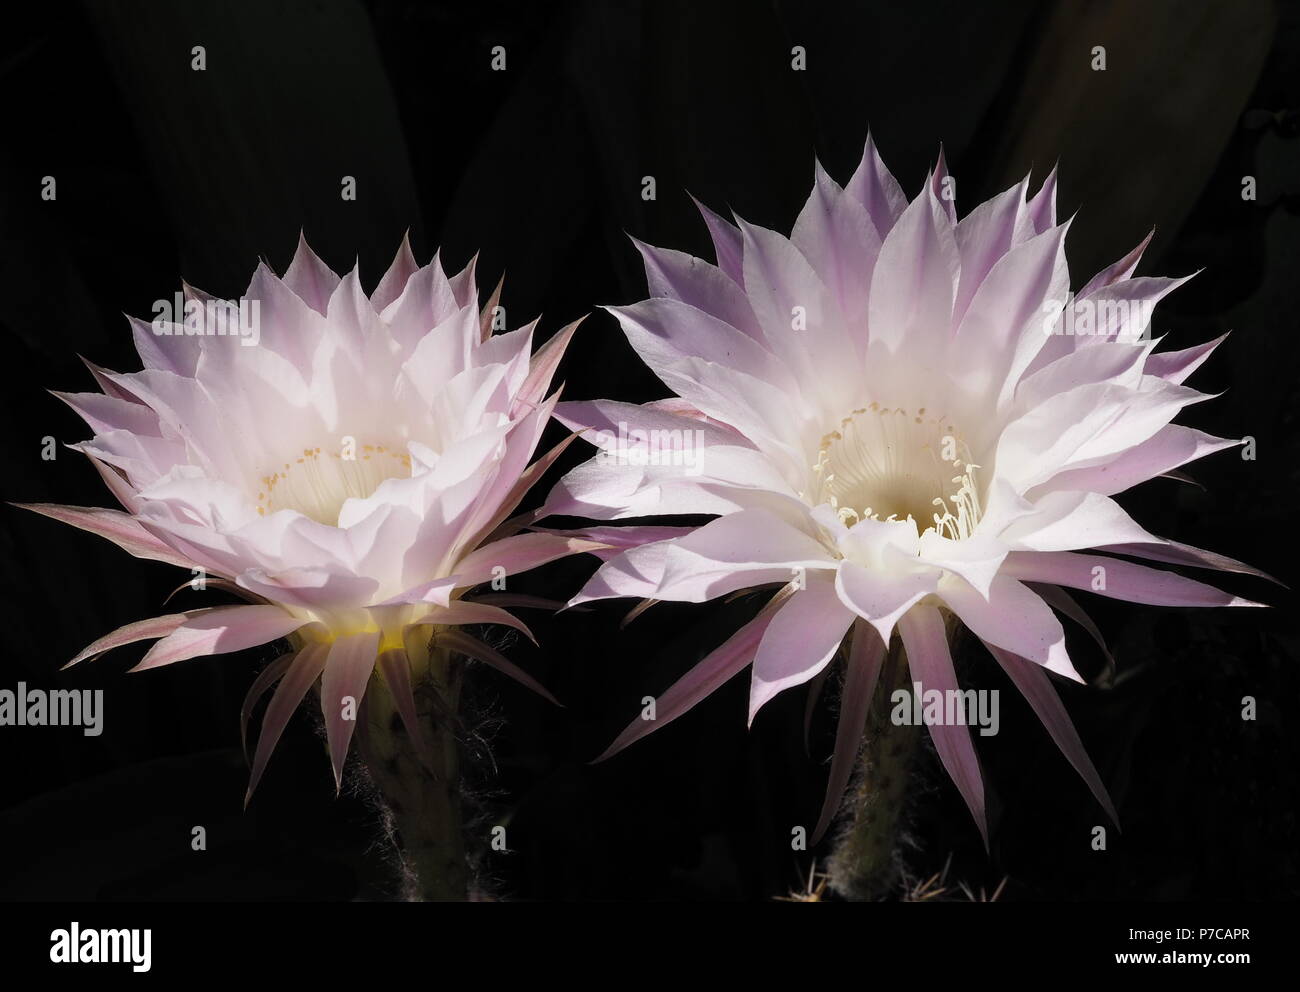 Cactus flower isolatet and zoom Stock Photo